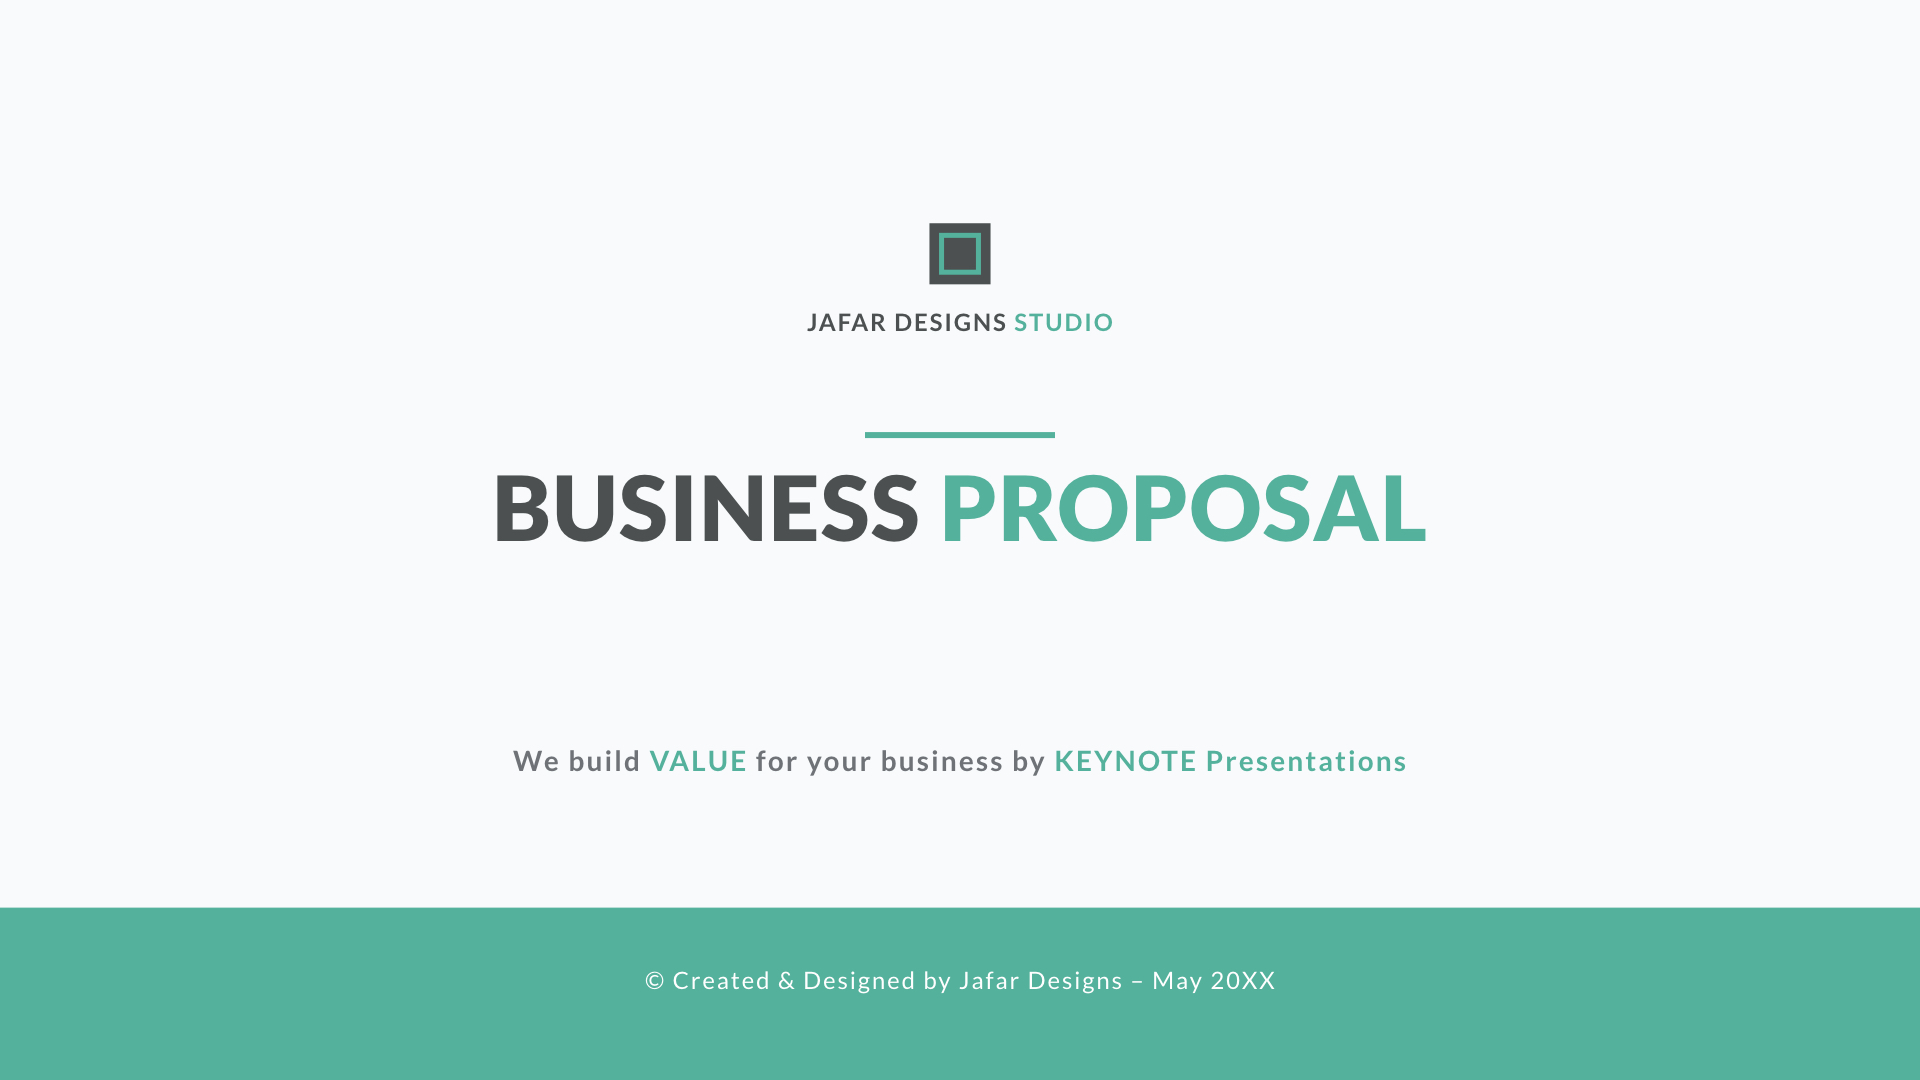 Business Proposal Keynote Template